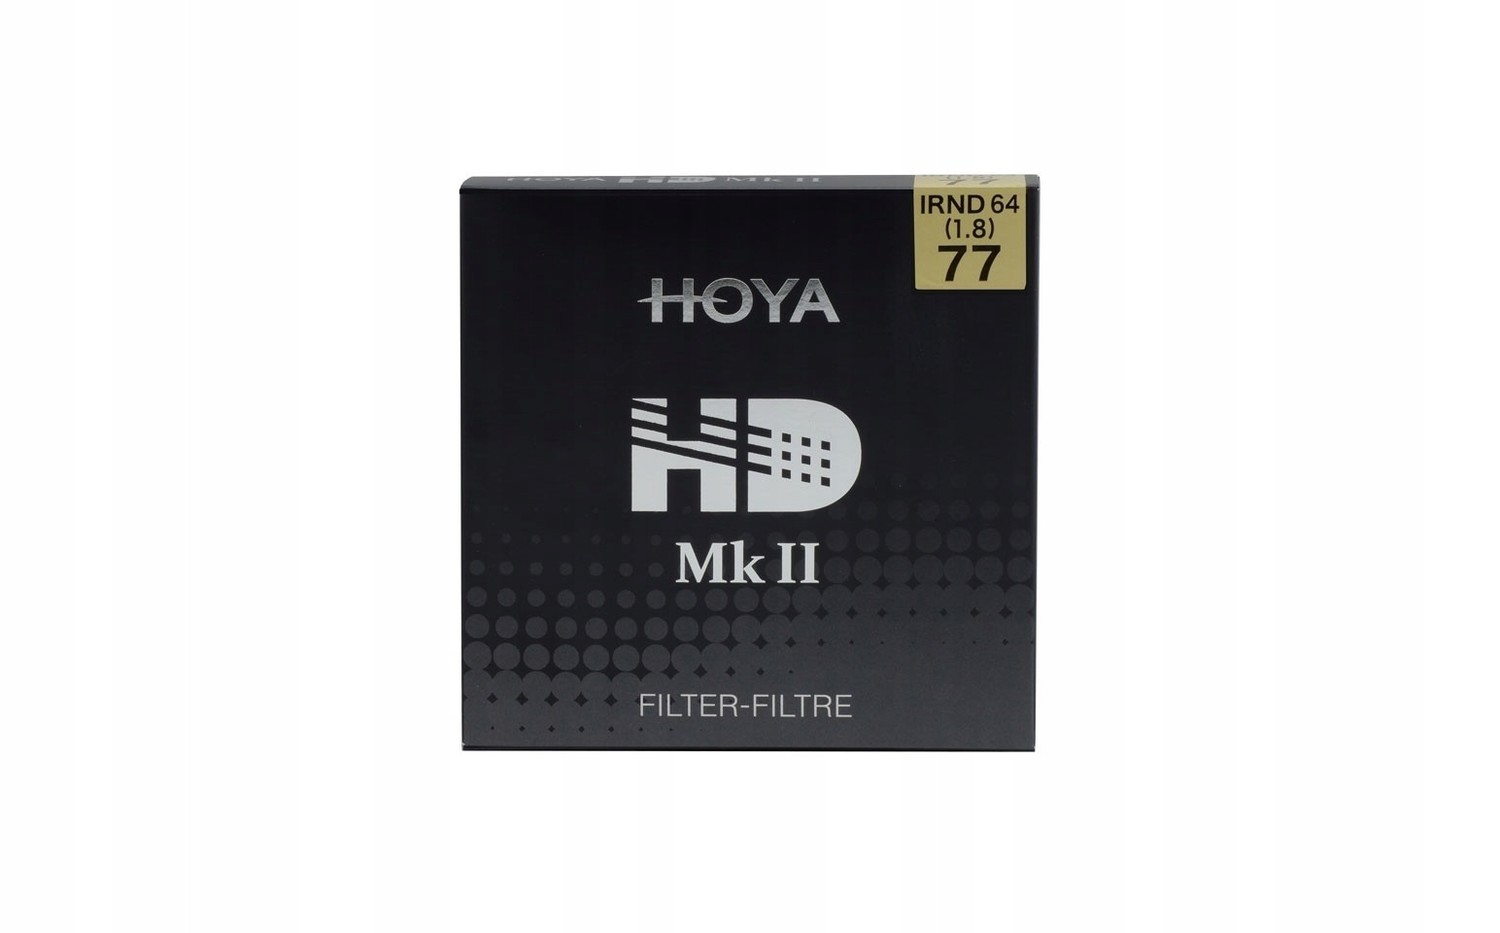 Filtr Hoya Hd MkII IRND64 (1.8) 58mm